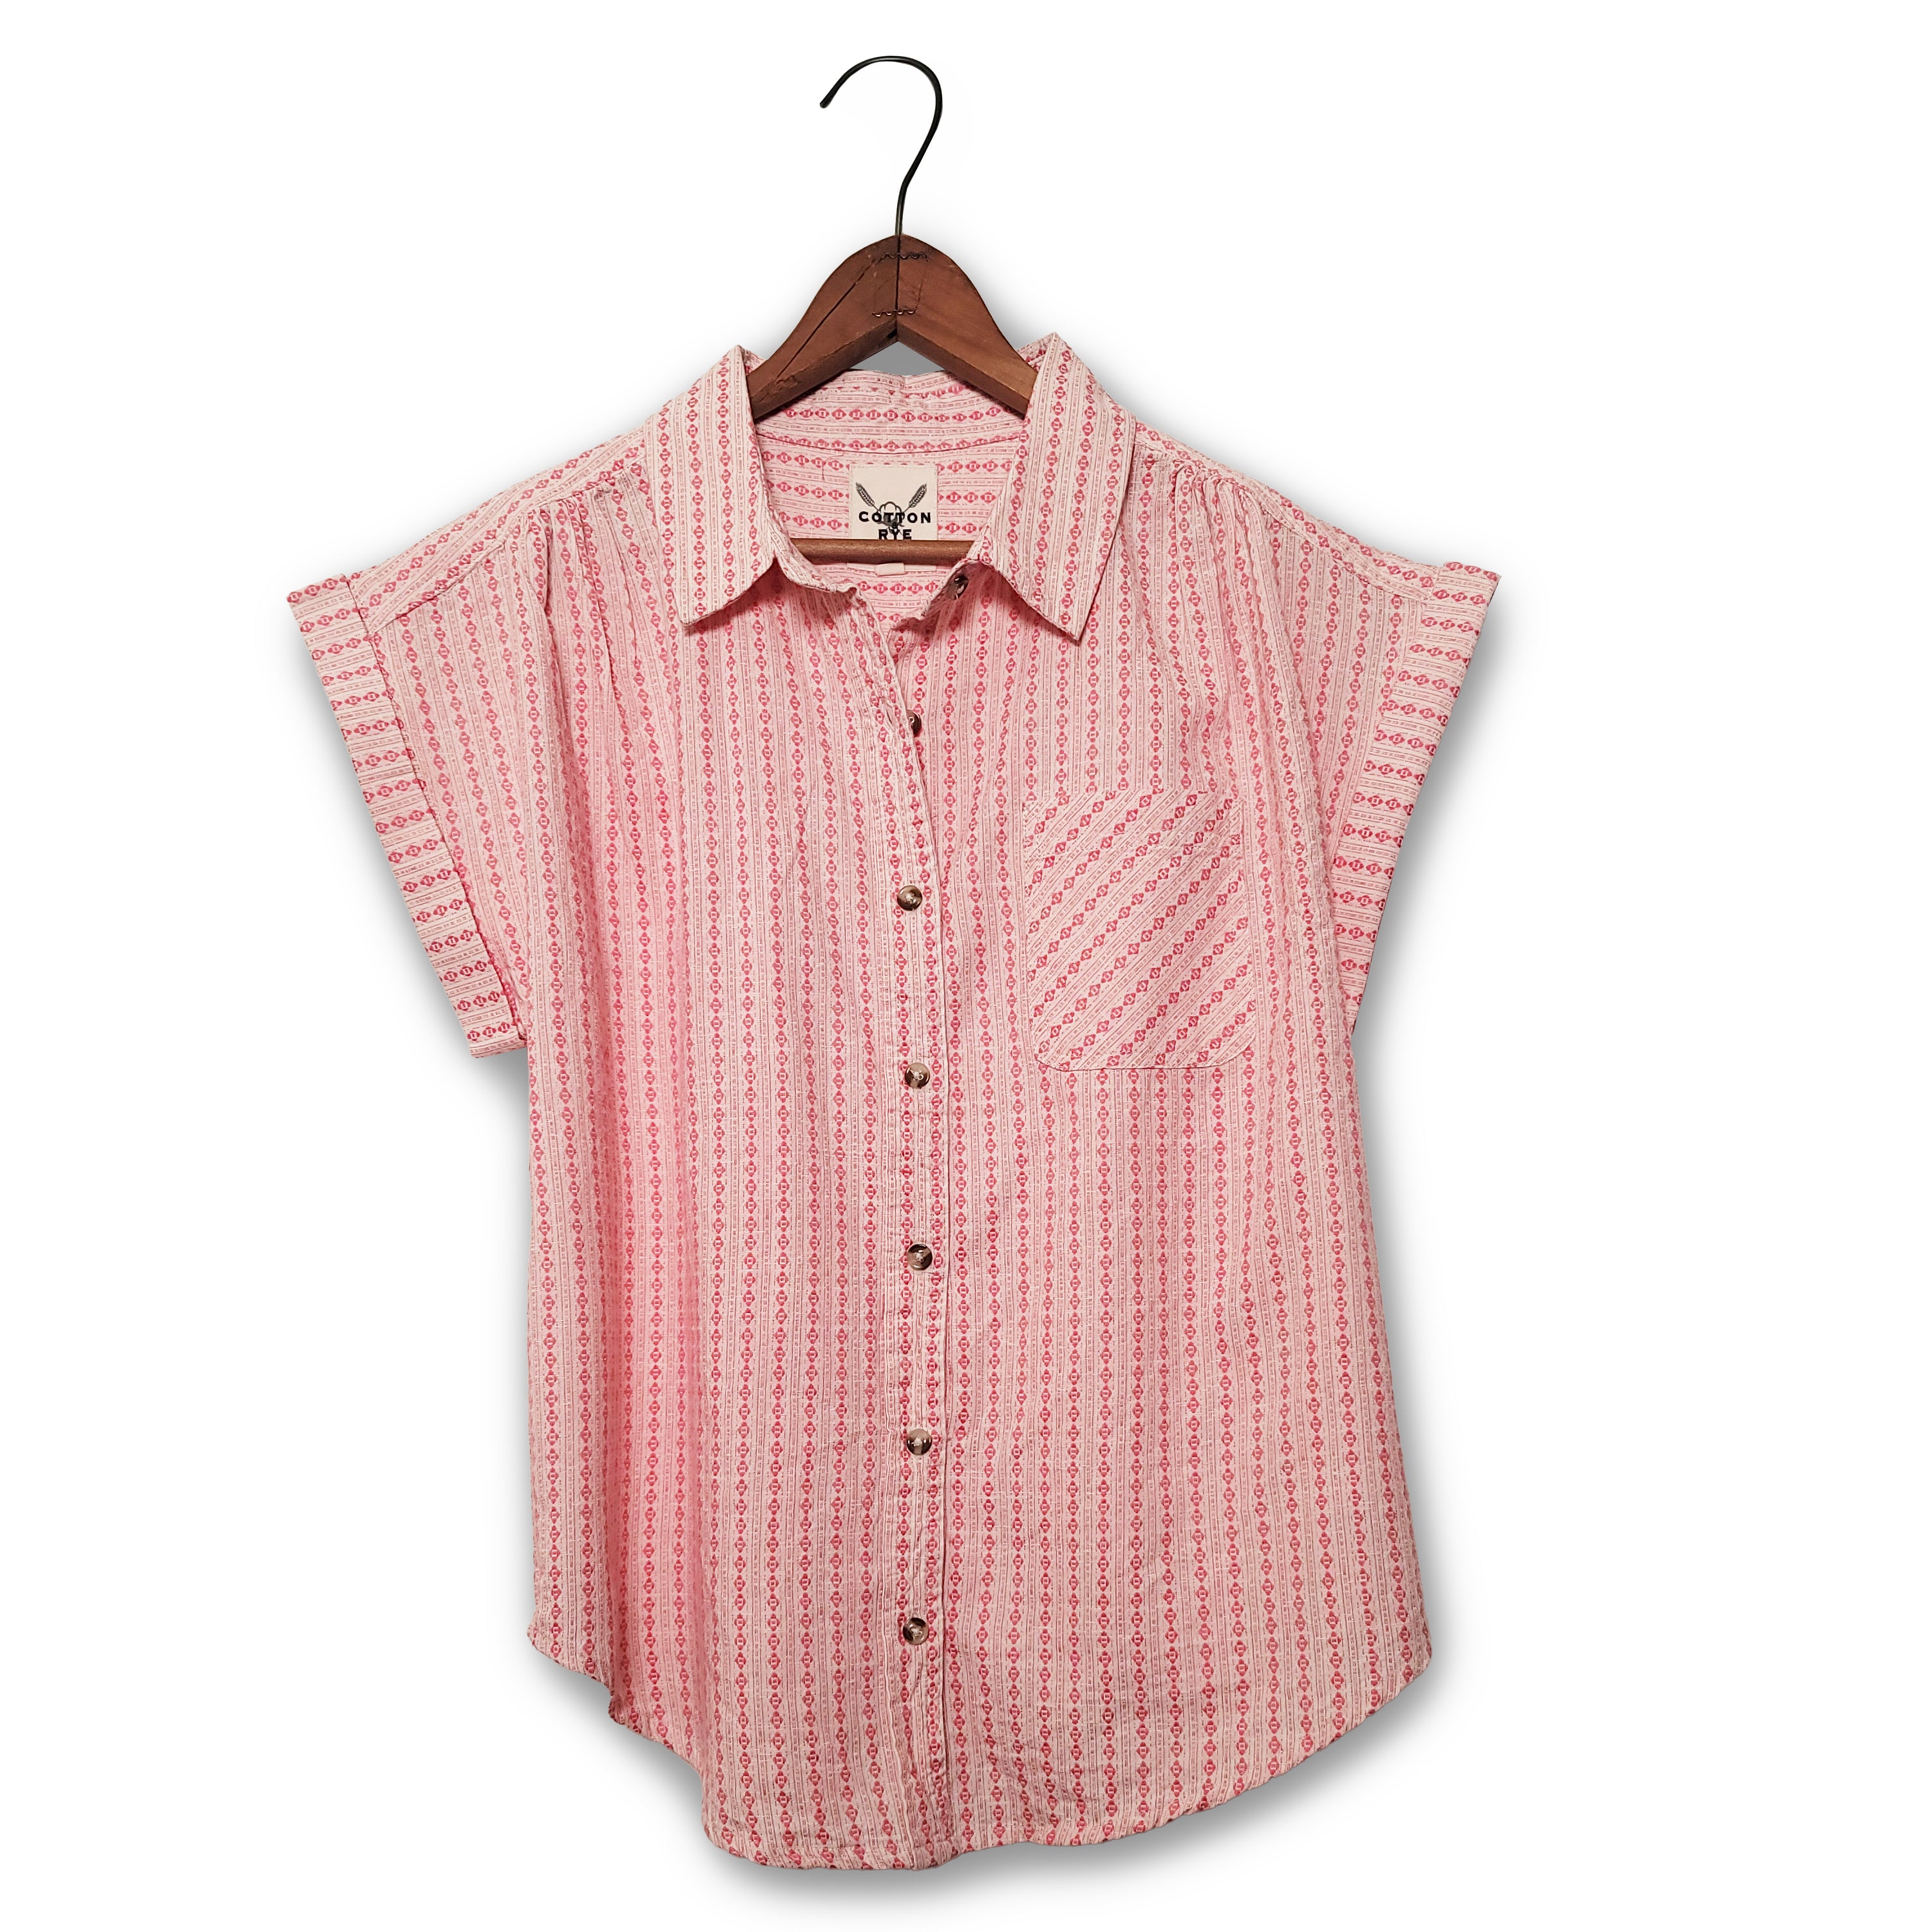 Dobby Shirt by Cotton & Rye #CRW934K White/Pink